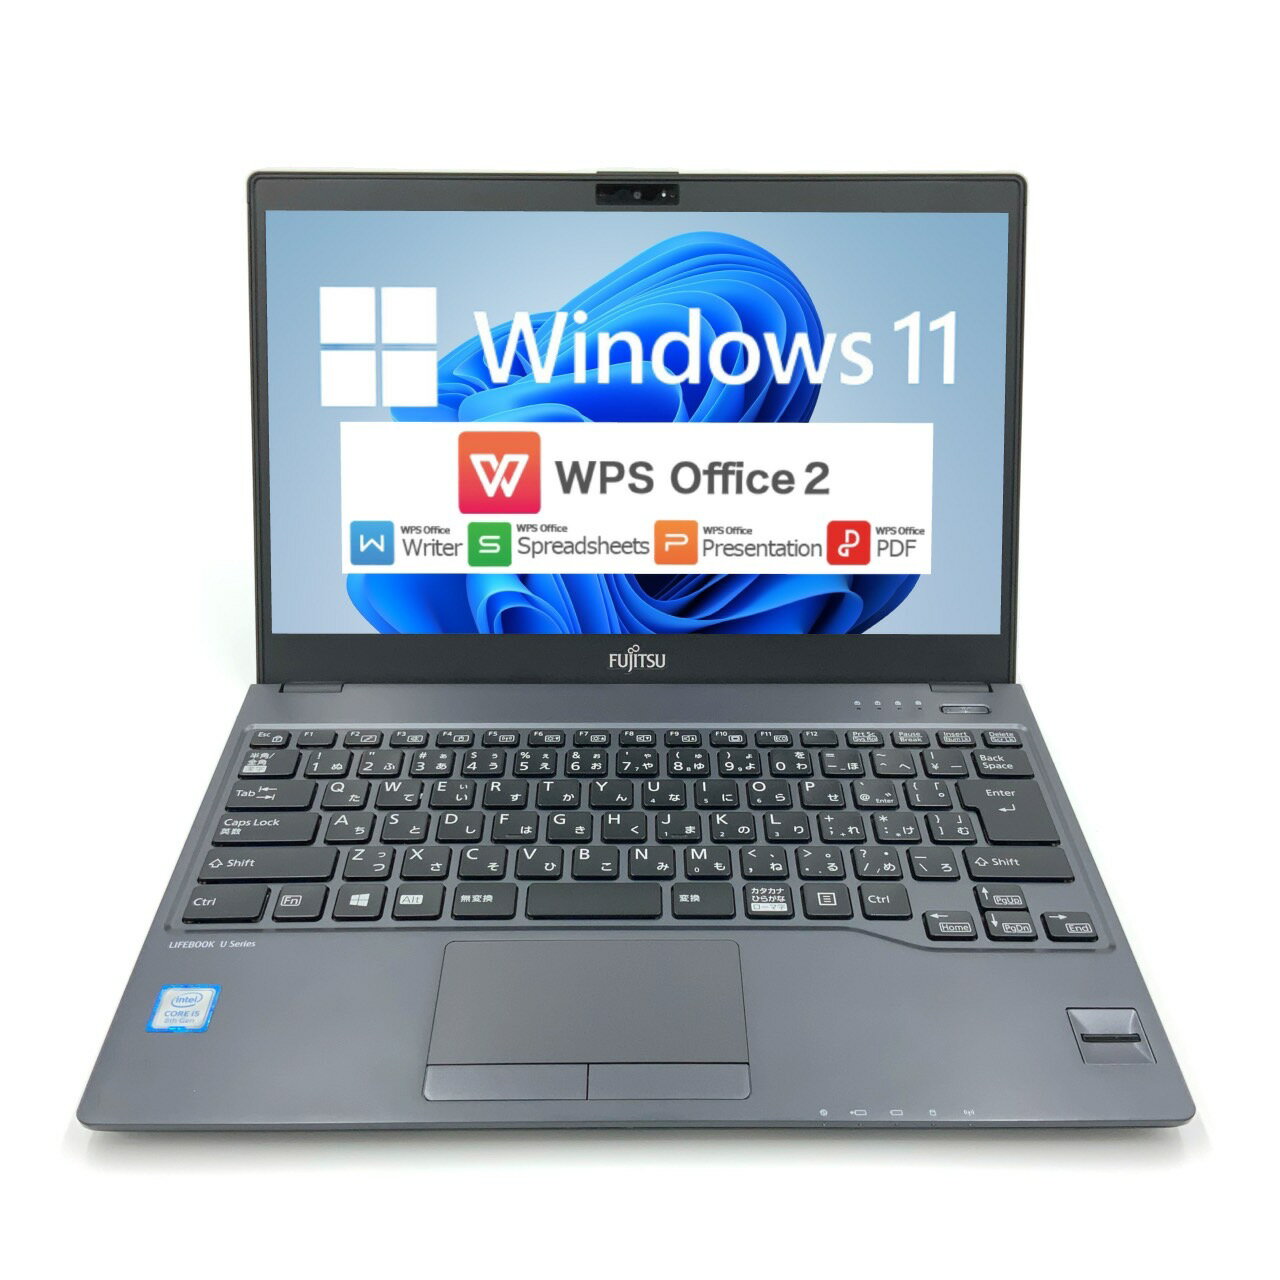 【Windows11】 【軽量ノート799g】 FUJITSU LIFEBOOK U938 第8世代 Core i5 8250U 8GB 新品SSD480GB 無線LAN フルHD 64bit WPS Office 13.3インチ 中古パソコン ノートパソコン Notebook 【中古】